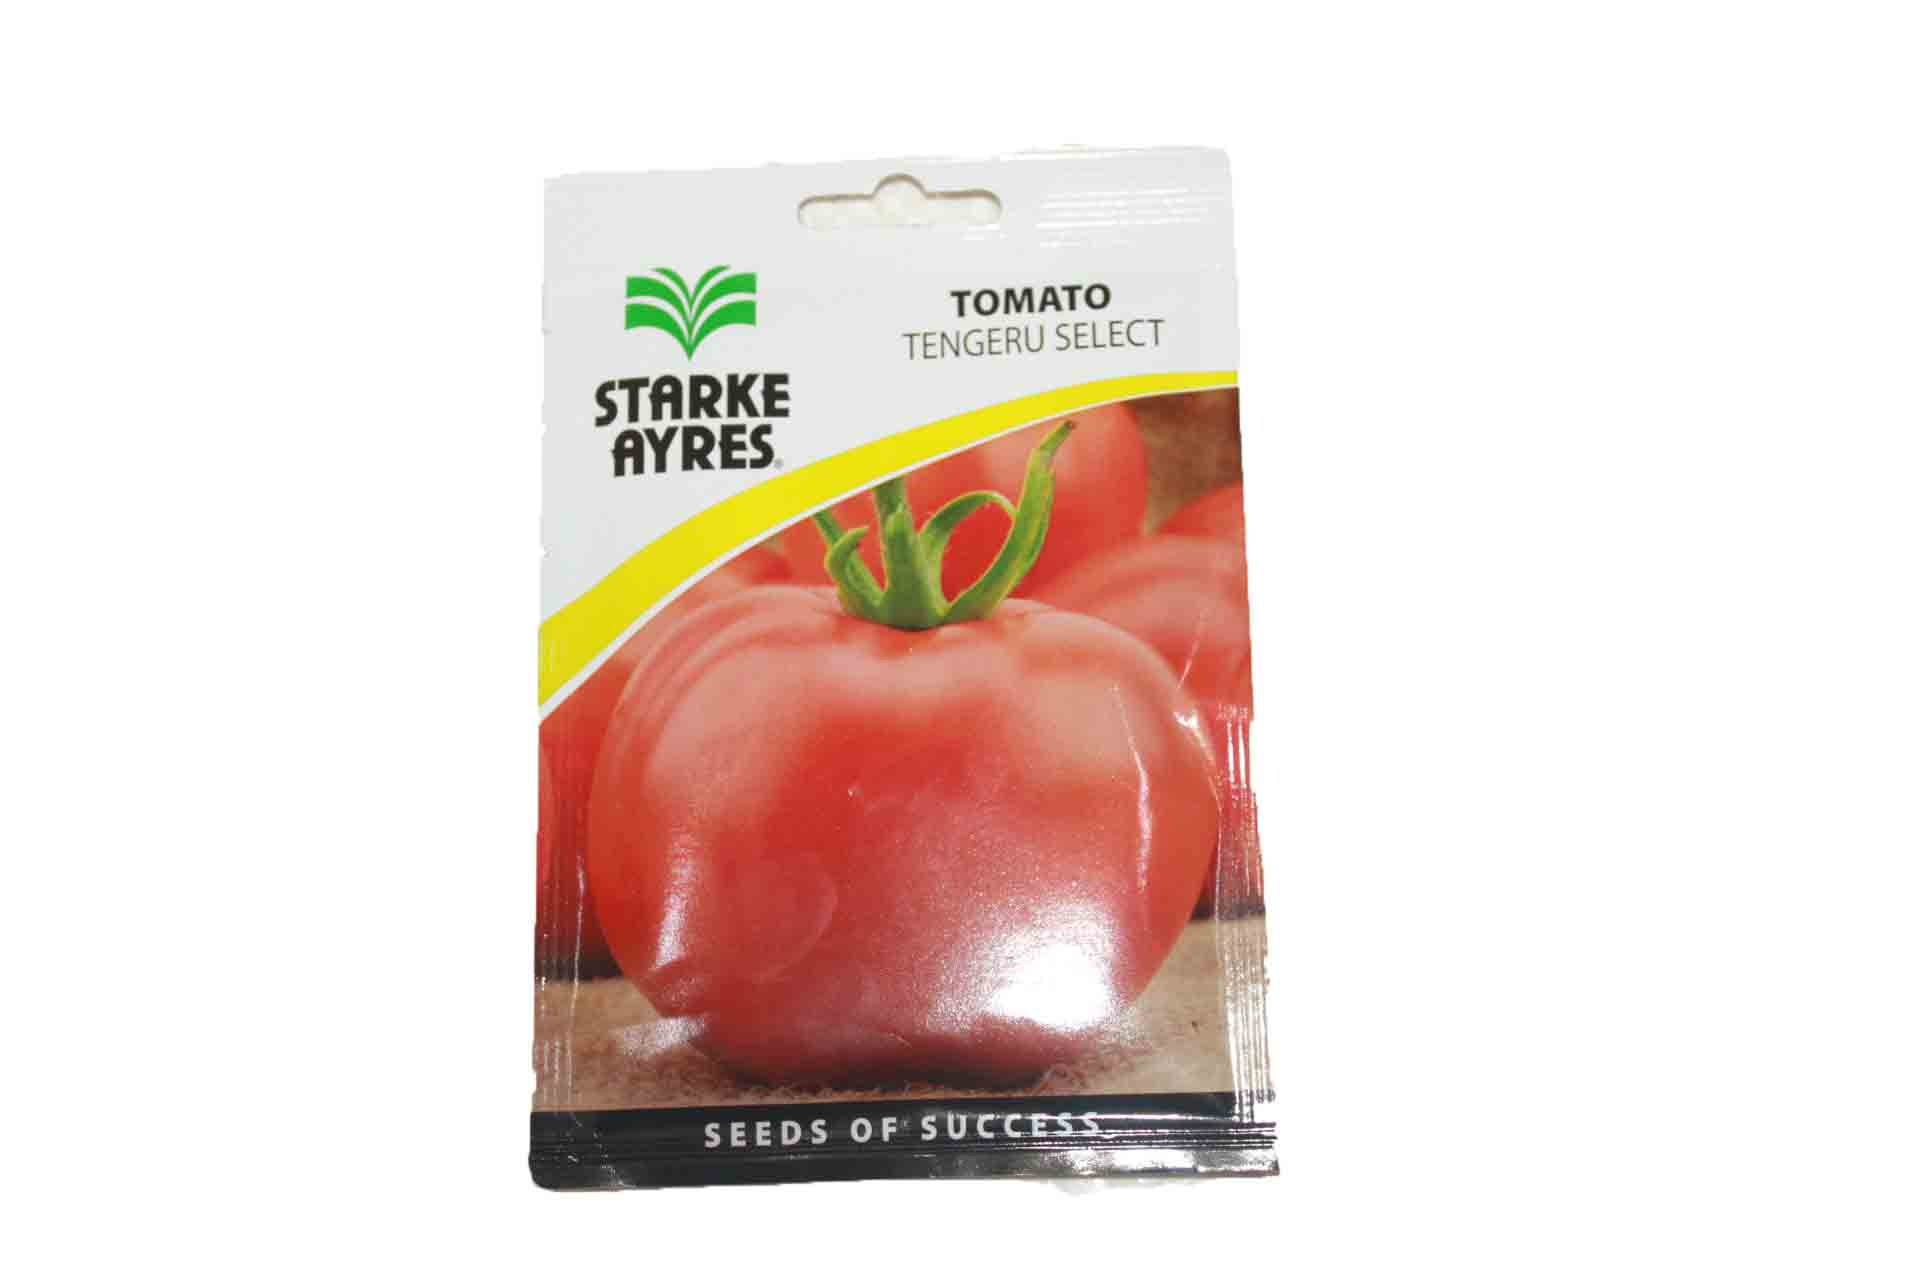 Tengeru Select Tomato Seeds